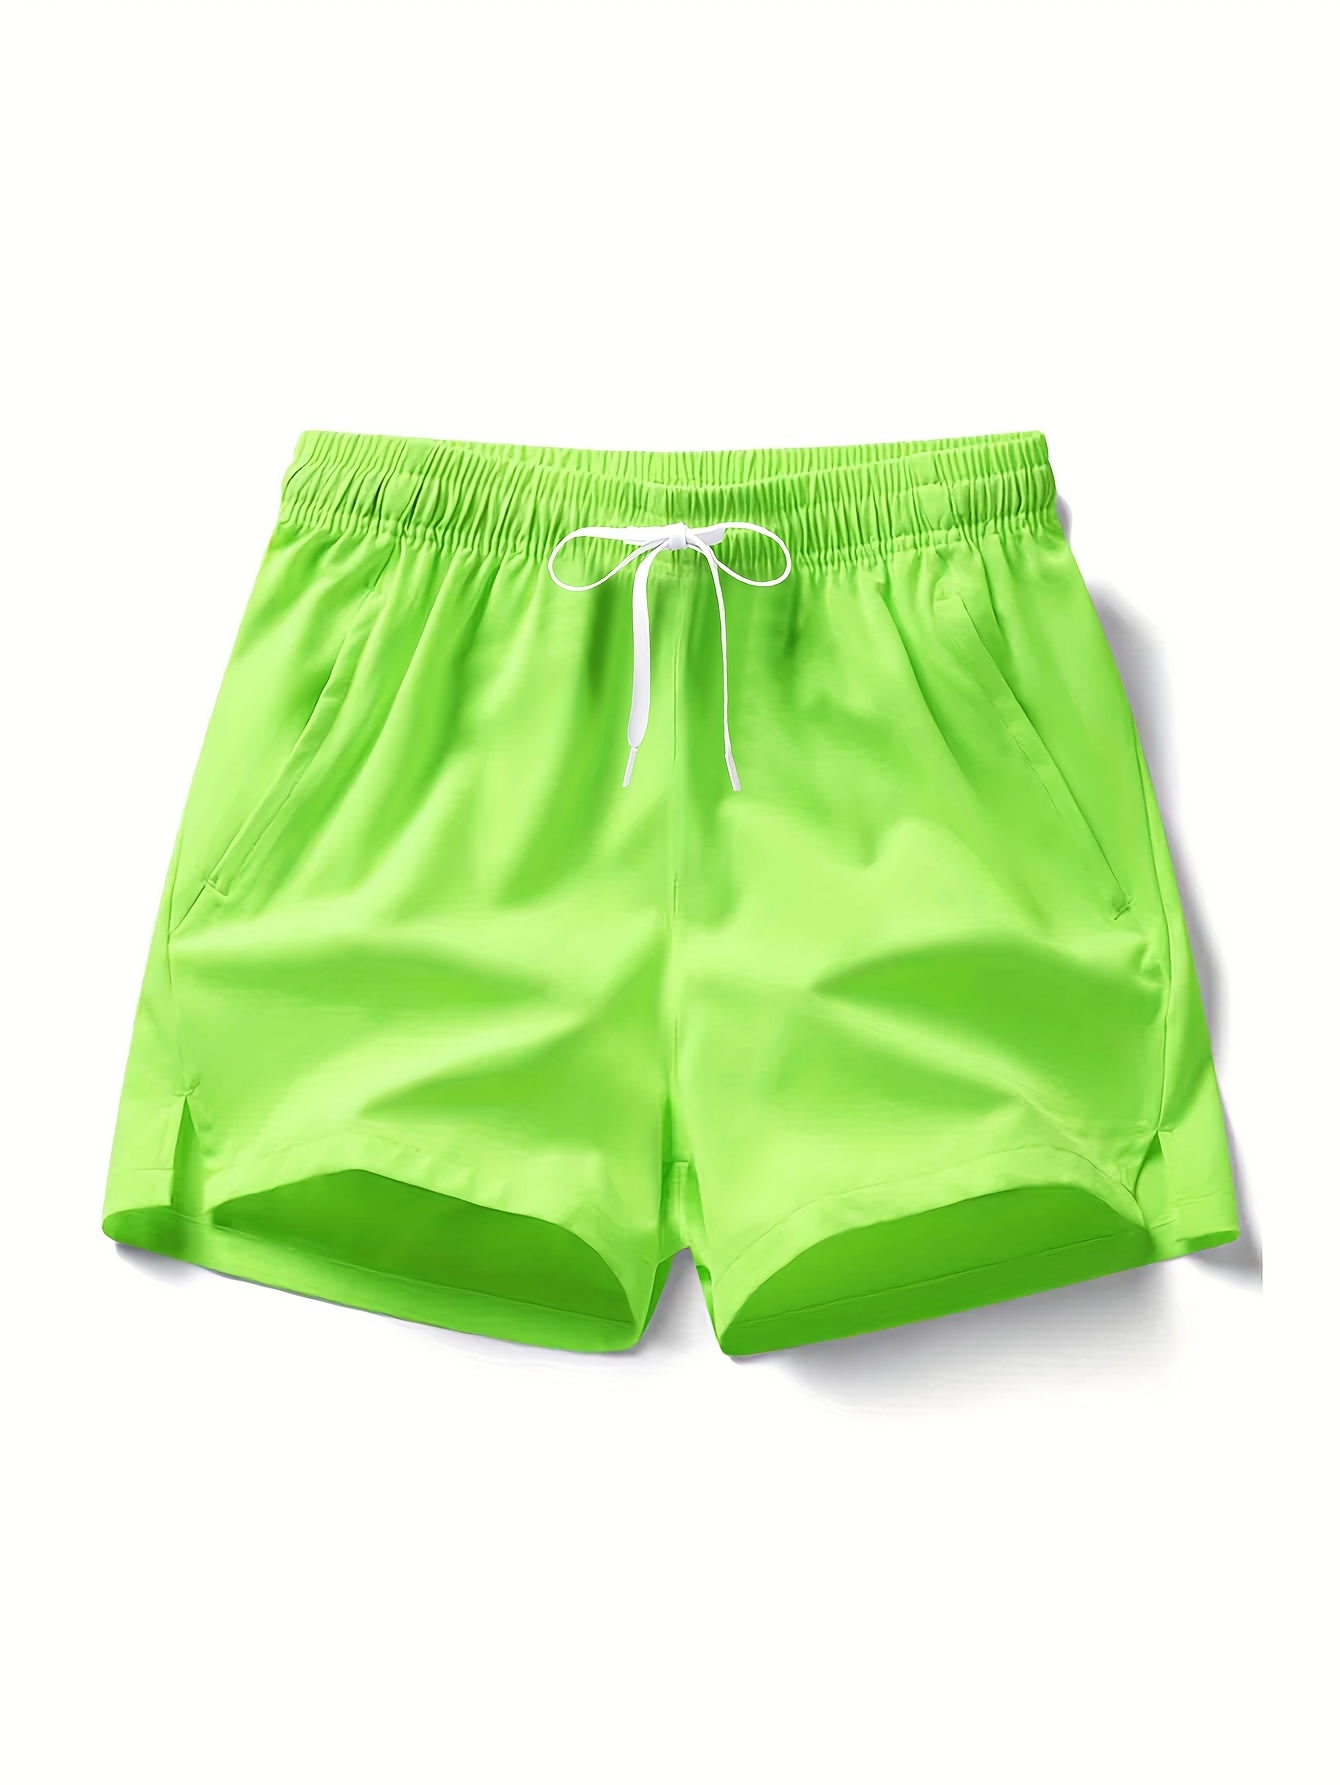 Pantalones cortos para para hombre en 1, pantalones cortos deportivos para  gimnasio, pantalones de verano para gimnasio Verde Zulema Shorts deportivos